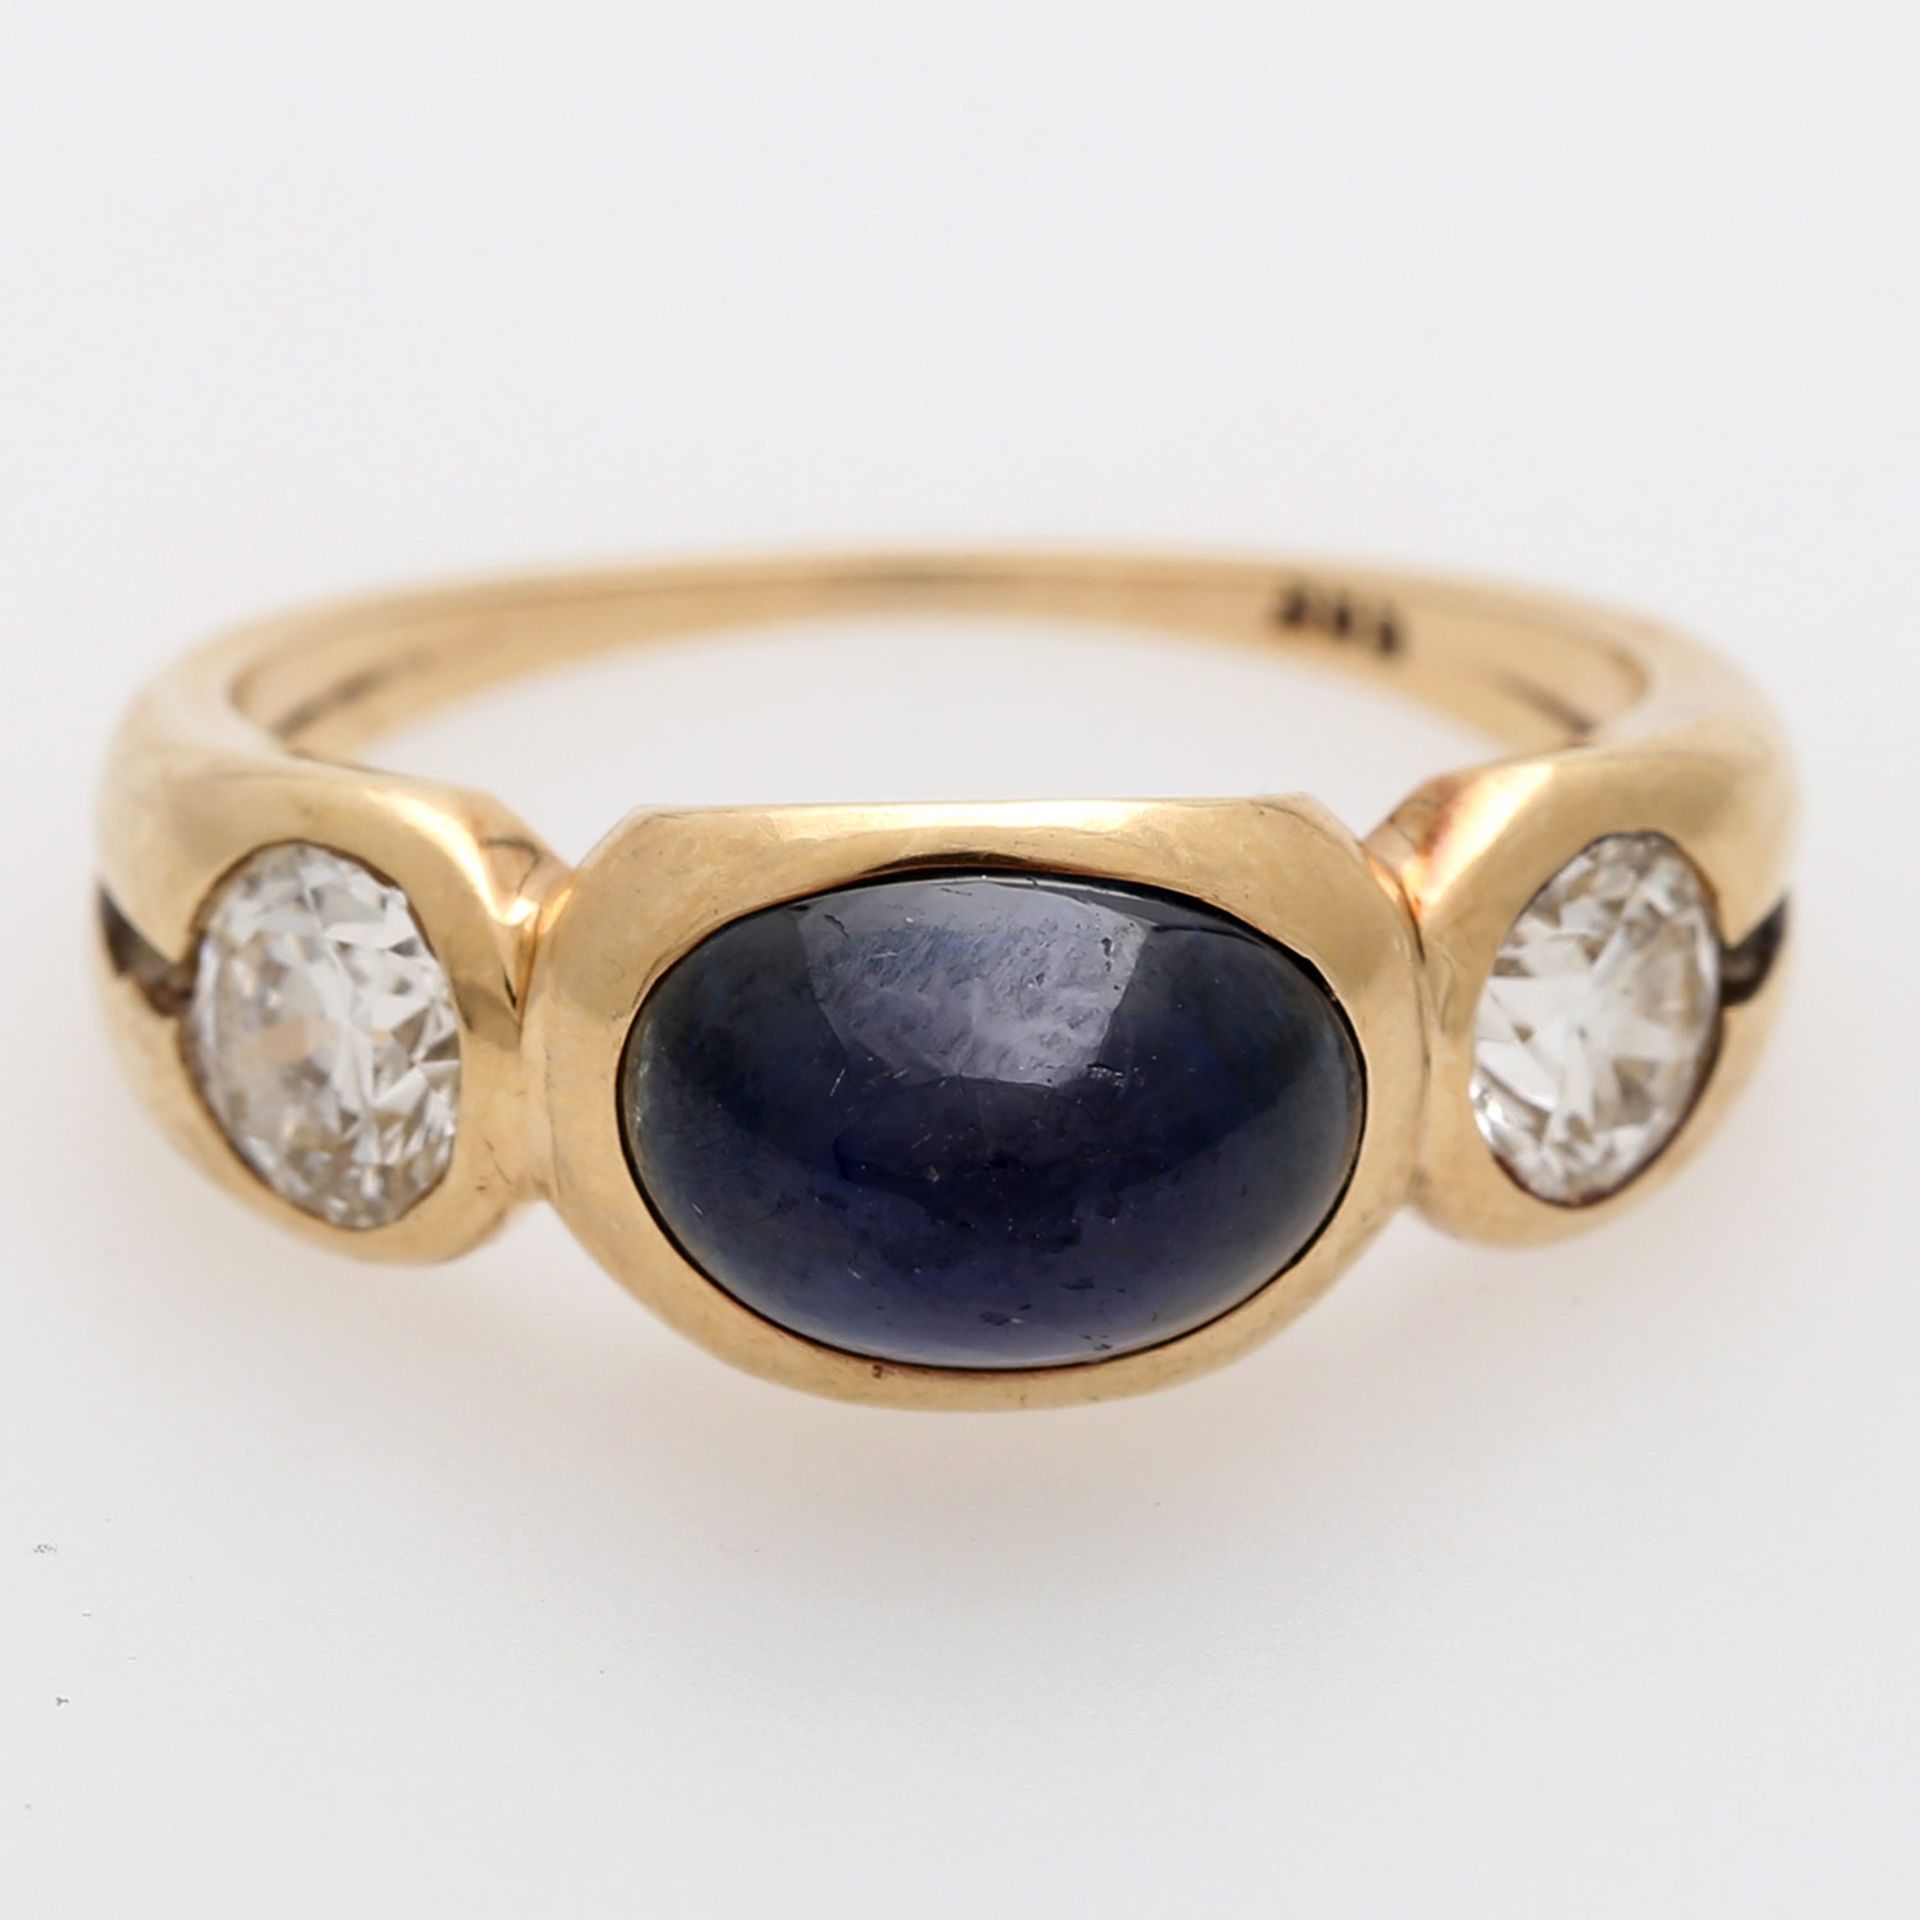 Ring mit ovalem Saphircab. u. 2 Brillanten zus. ca. 0,5 ct., LGW- GW (J-K) / VS, GG 14K, RW: 56. *